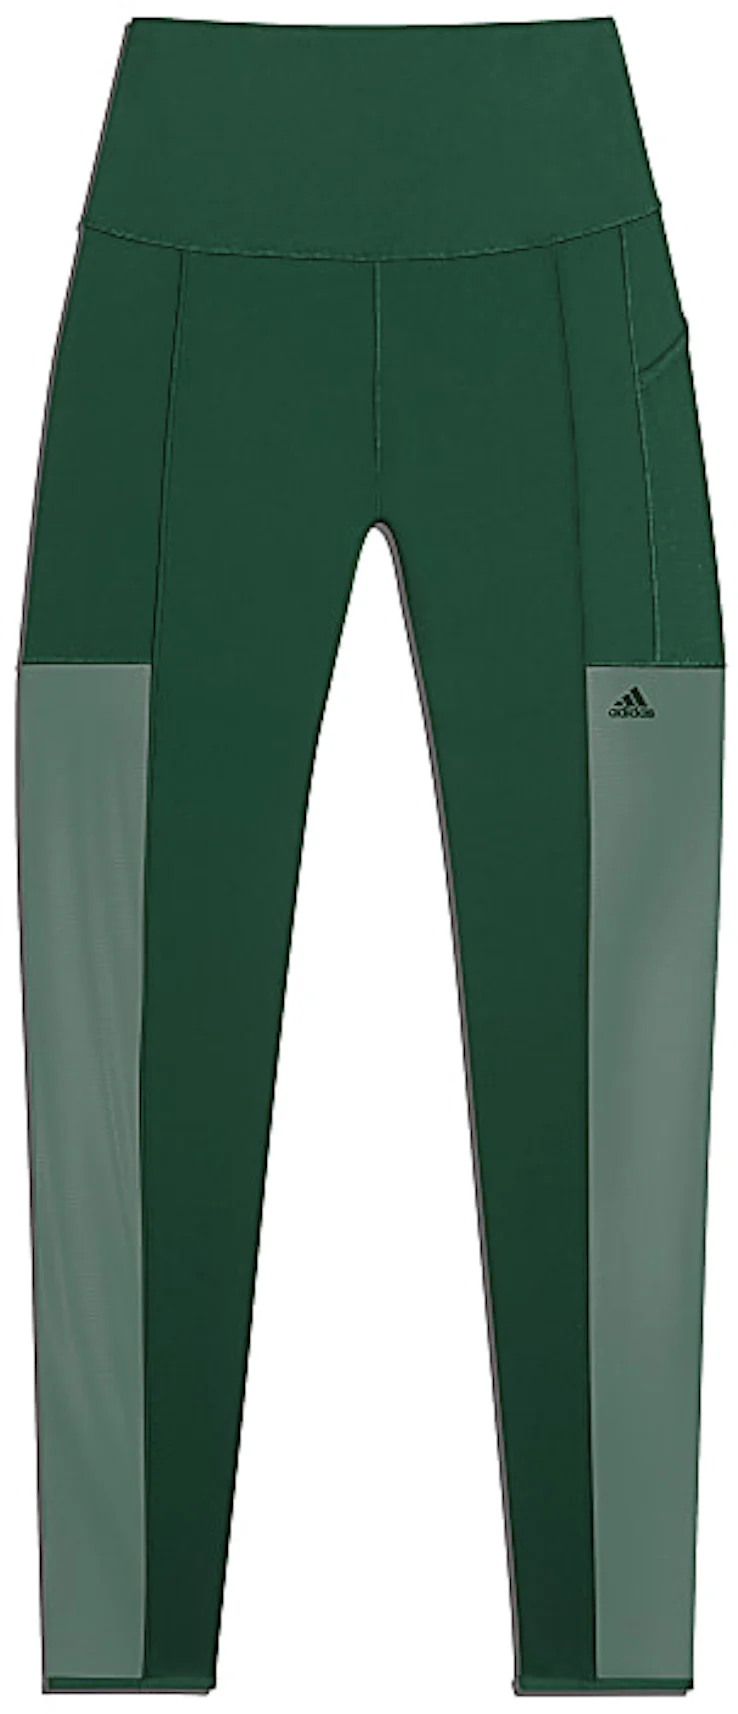 adidas Ivy Park Cutout Medium Support Bra (Plus Size) Dark Green